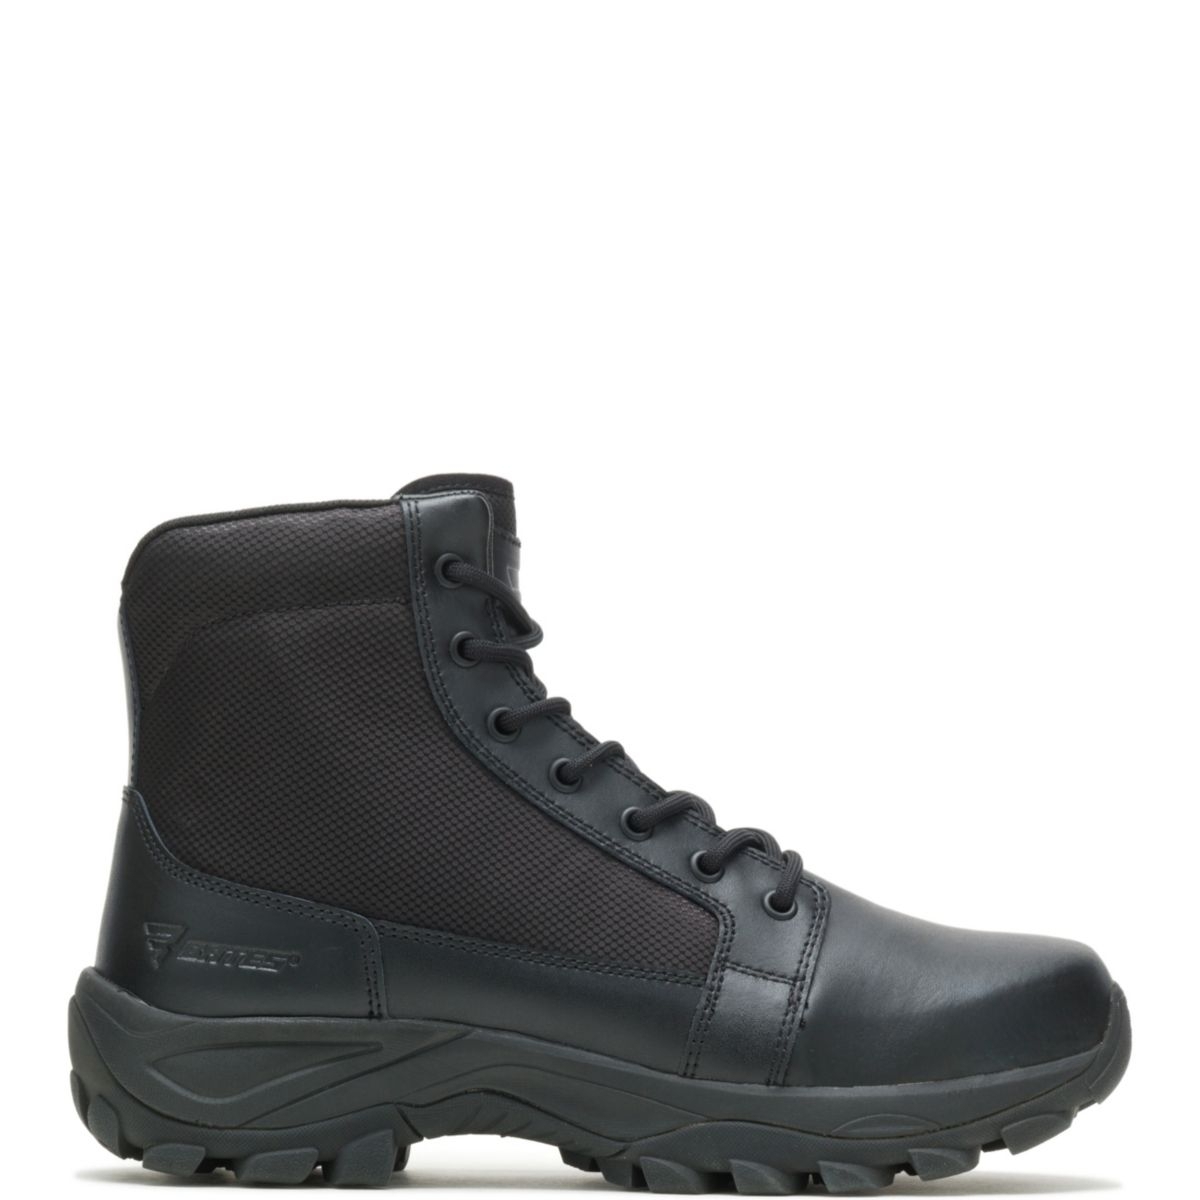 Bates Men's Fuse Mid 6-inch Side Zip Boot Black - E06506 BLACK - BLACK, 7